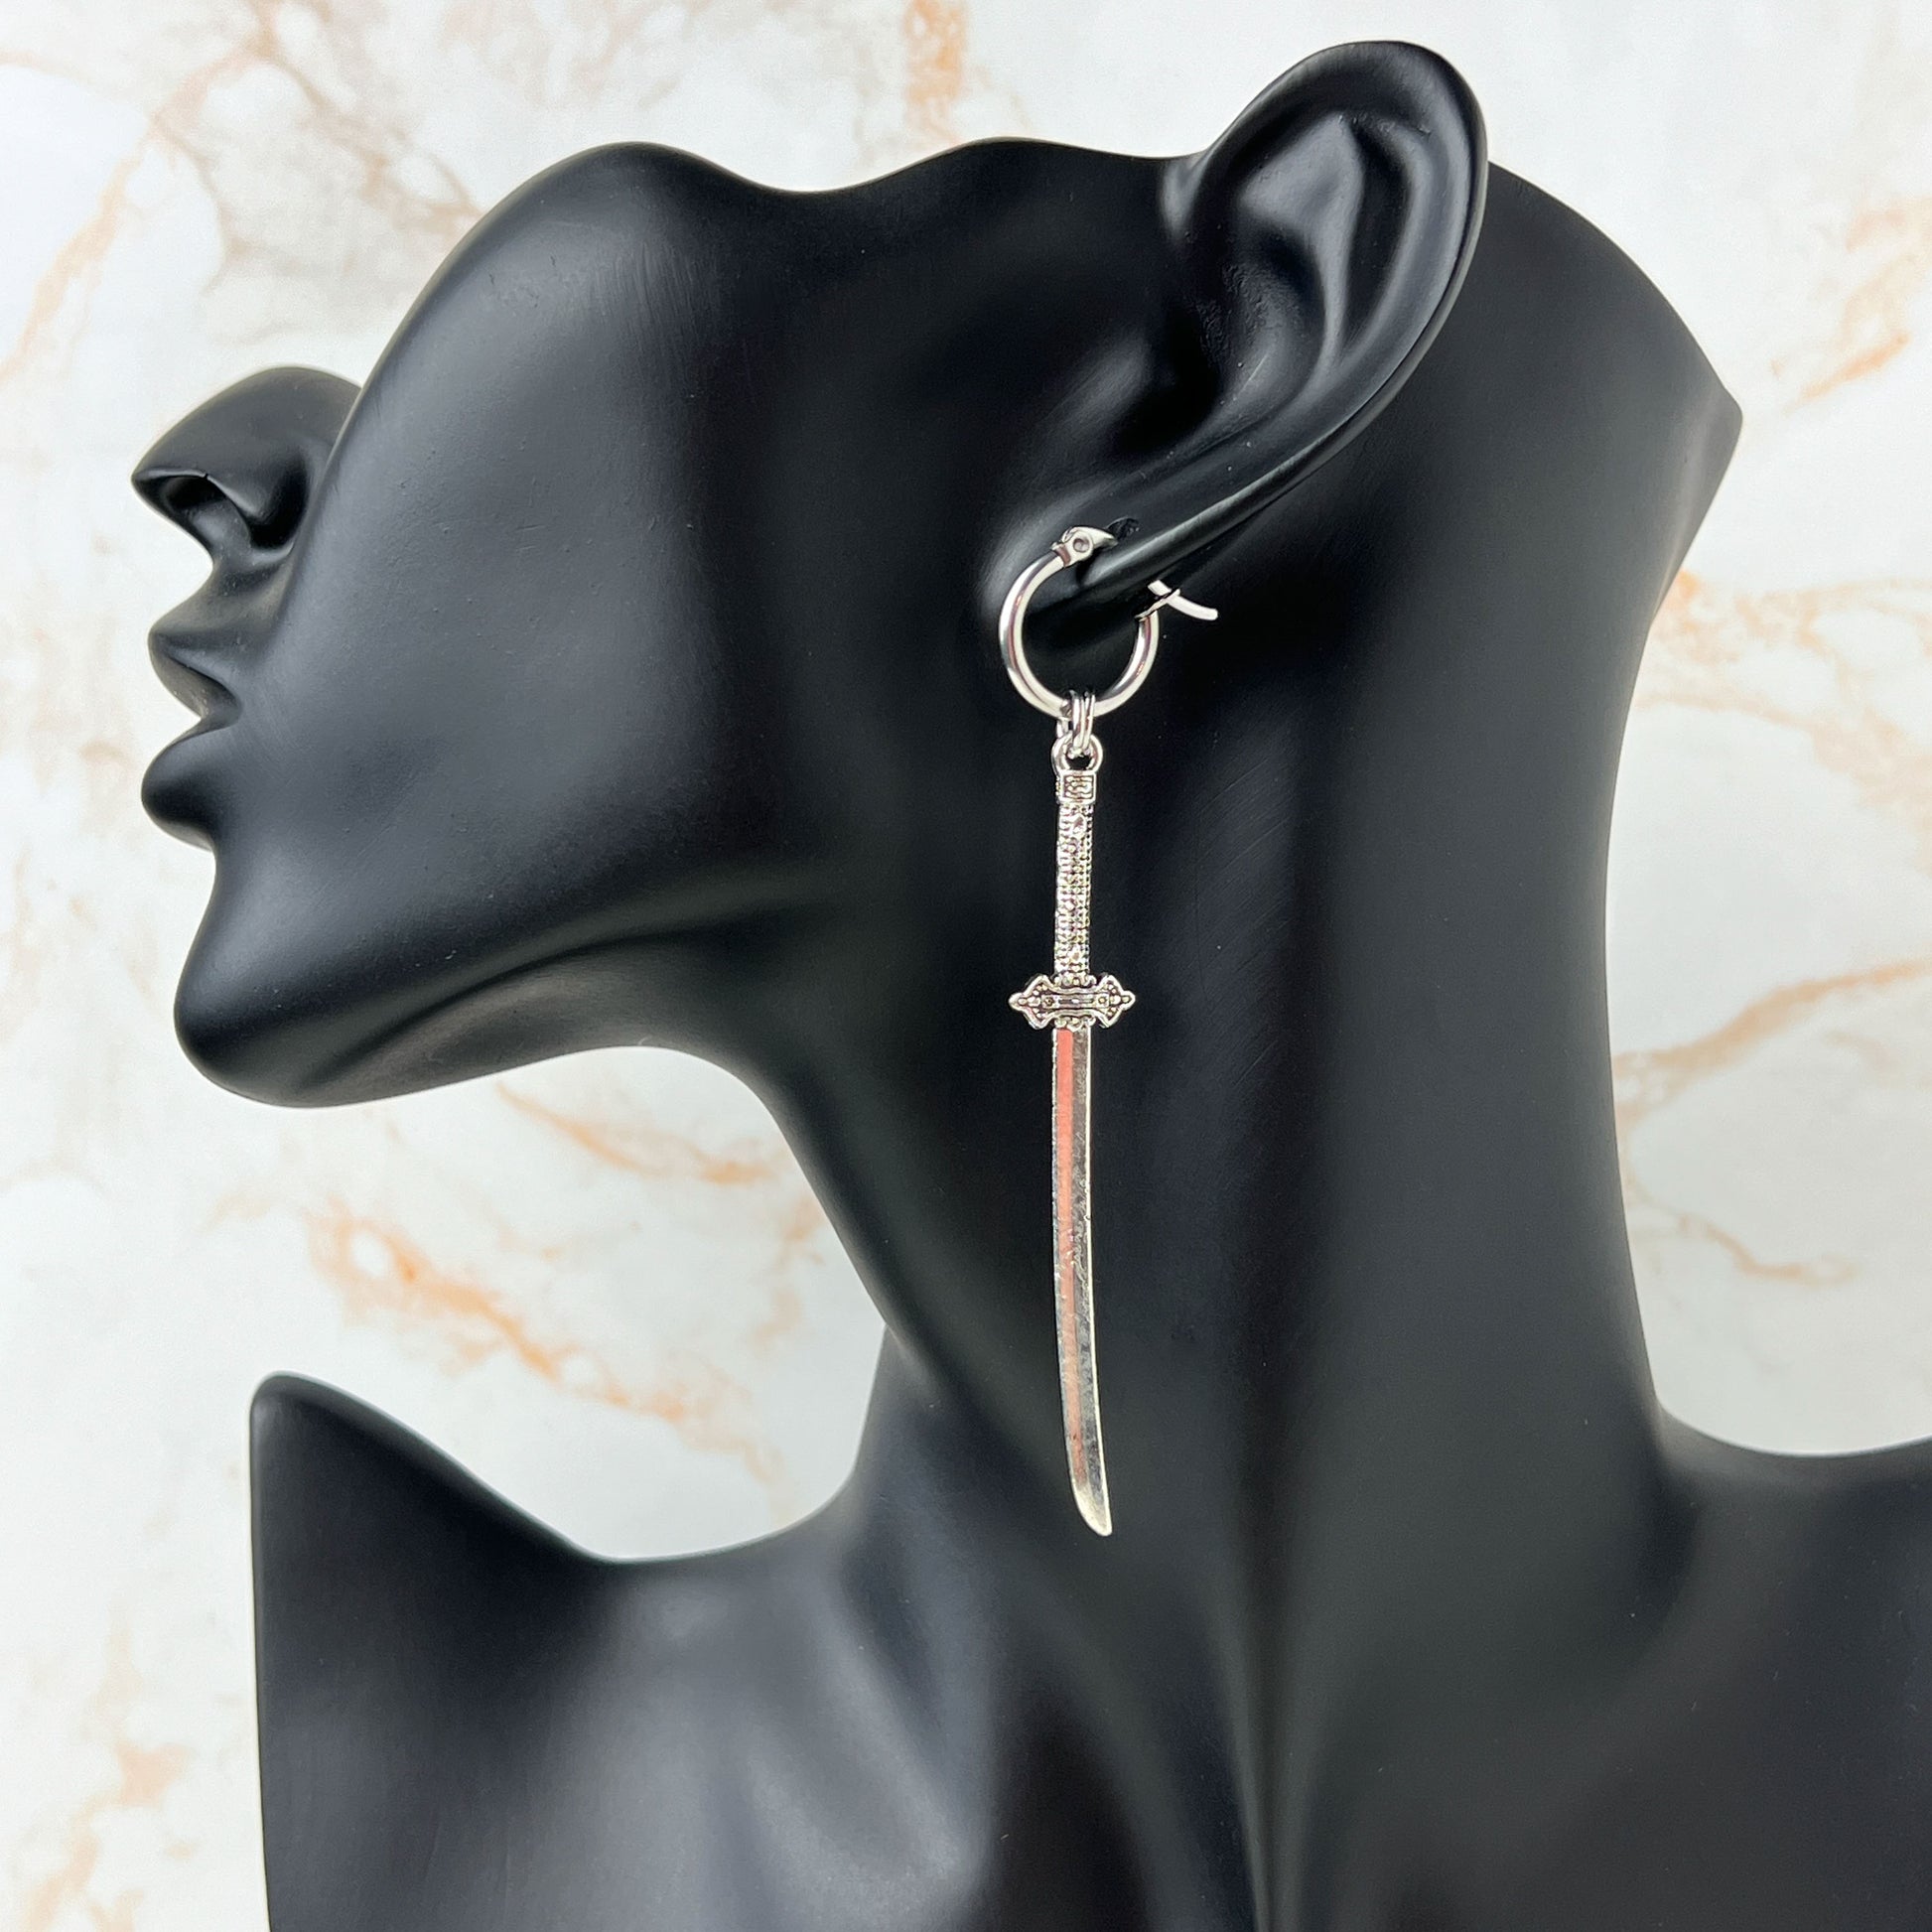 Katana sword earrings, with hypoallergenic stainless steel hoops Baguette Magick